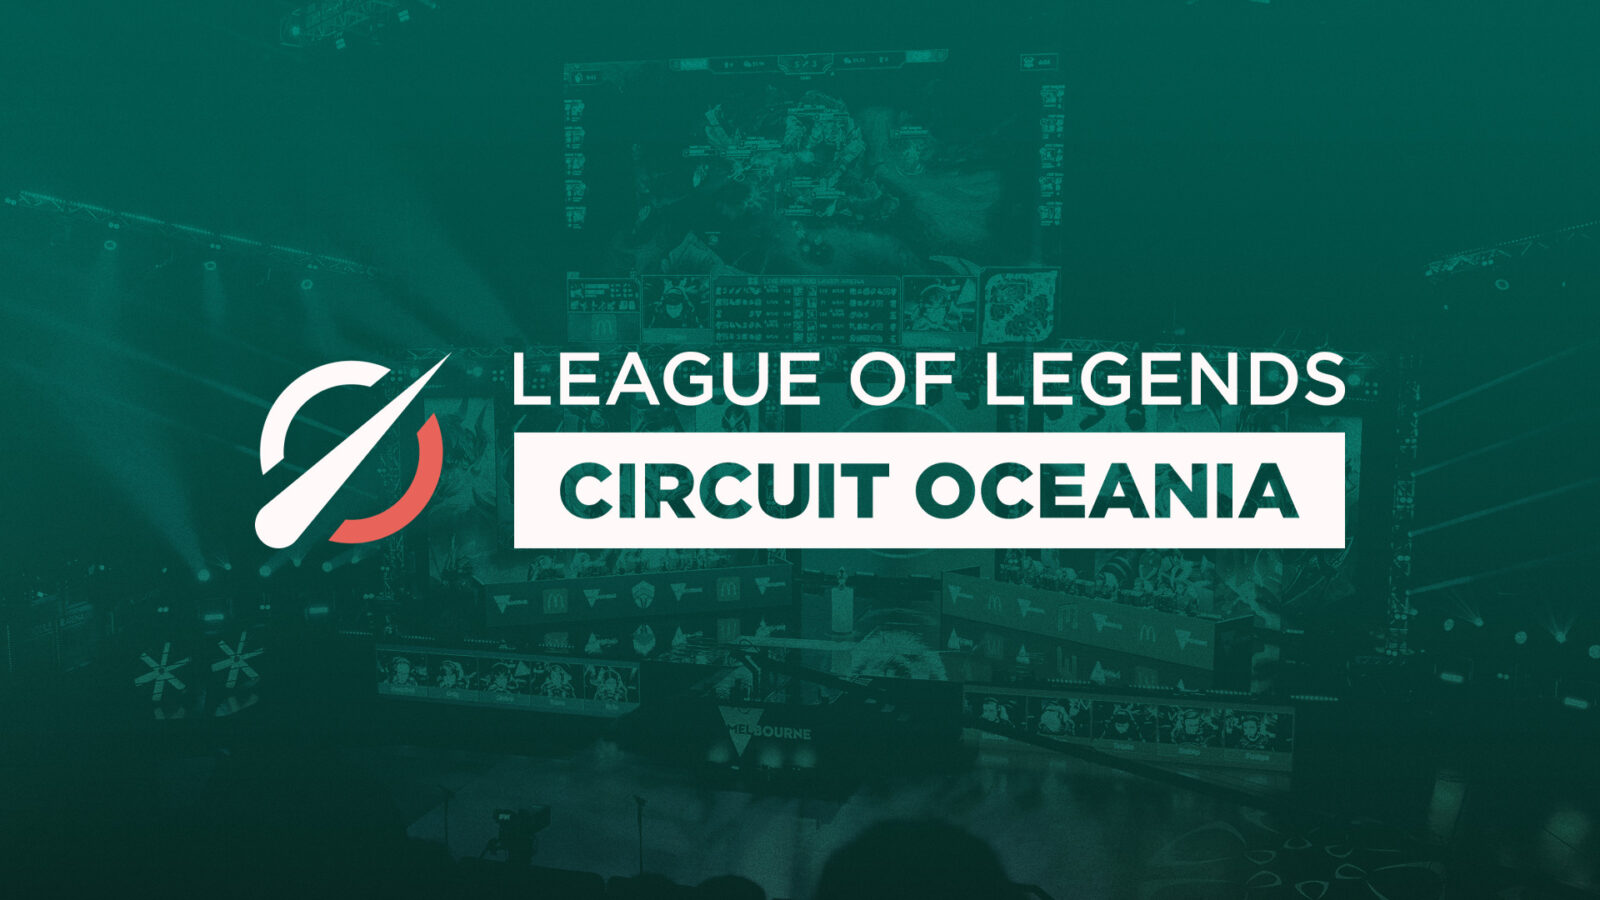 League of Legends Circuit Oceania match updates